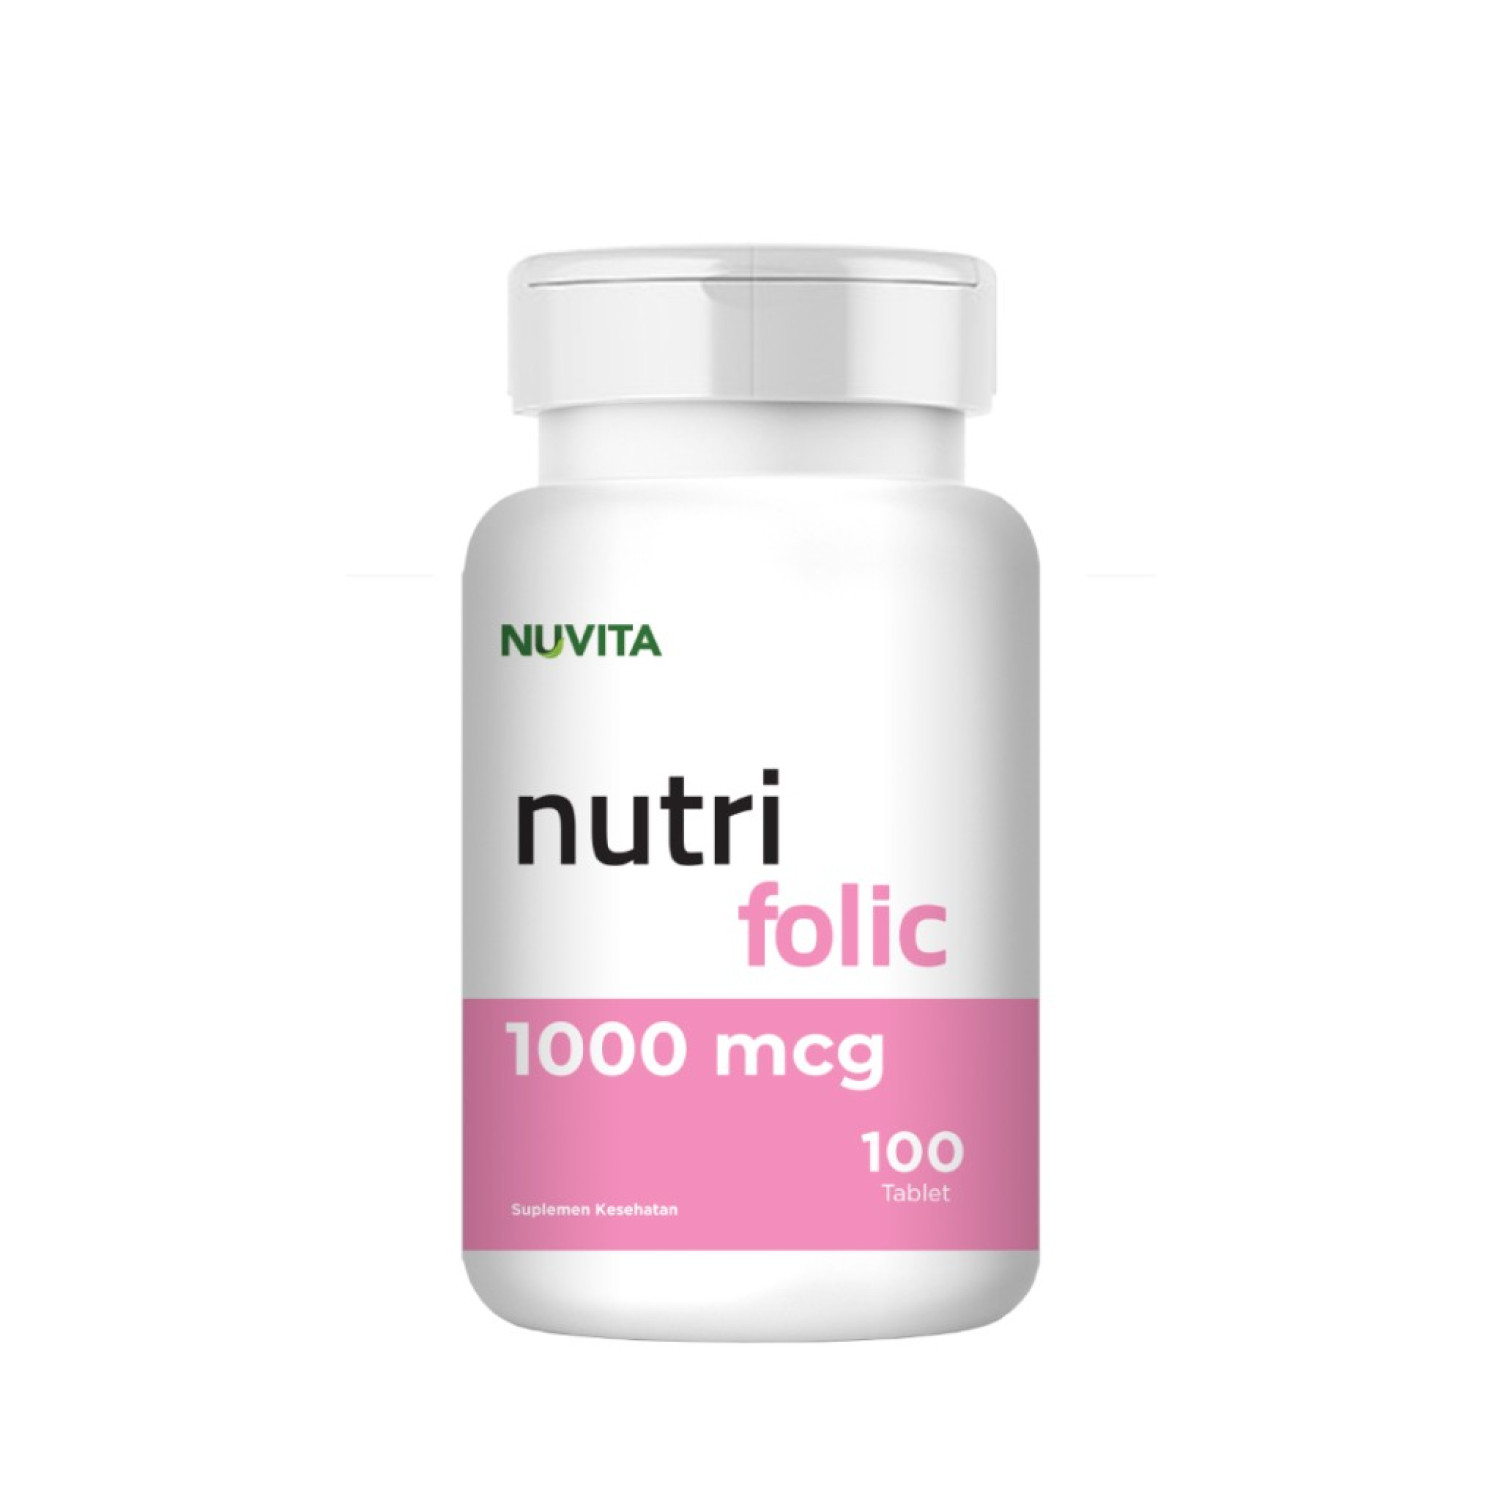 nuvita-nutri-folic-1000-mg-654b5bcb17453.jpeg